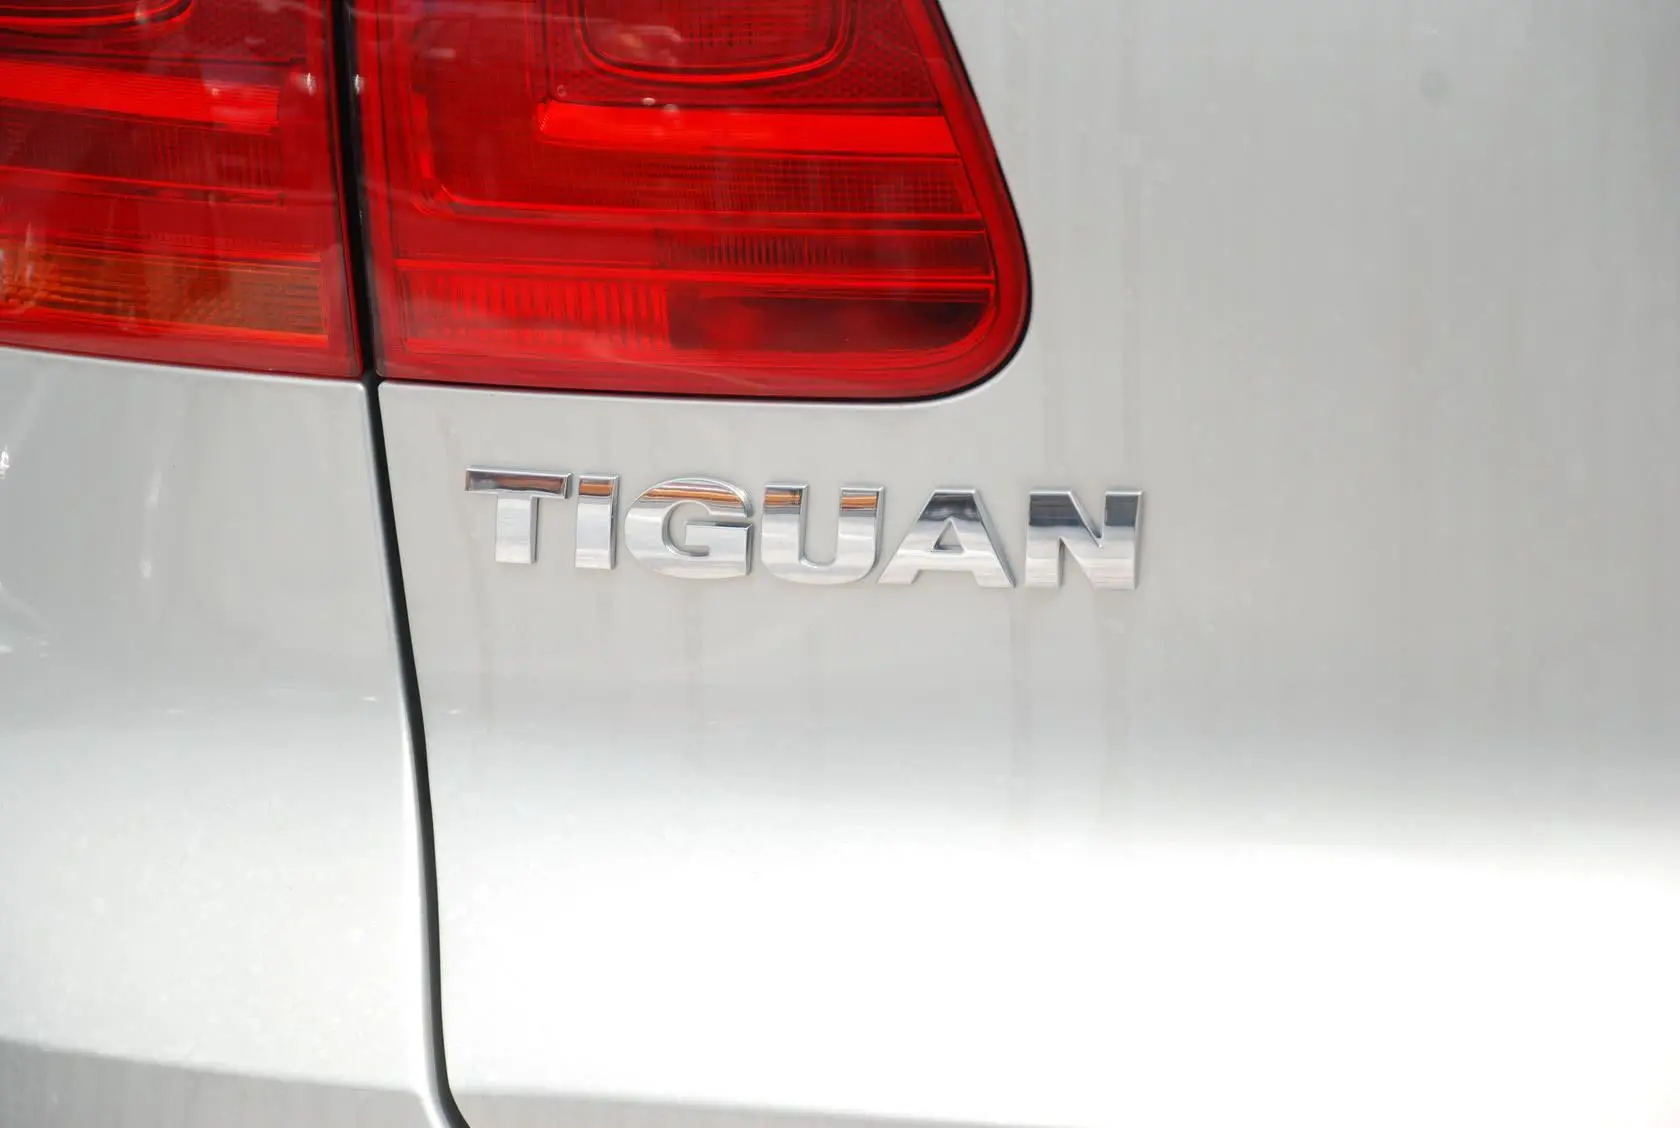 Tiguan2.0 TSI 舒适版外观